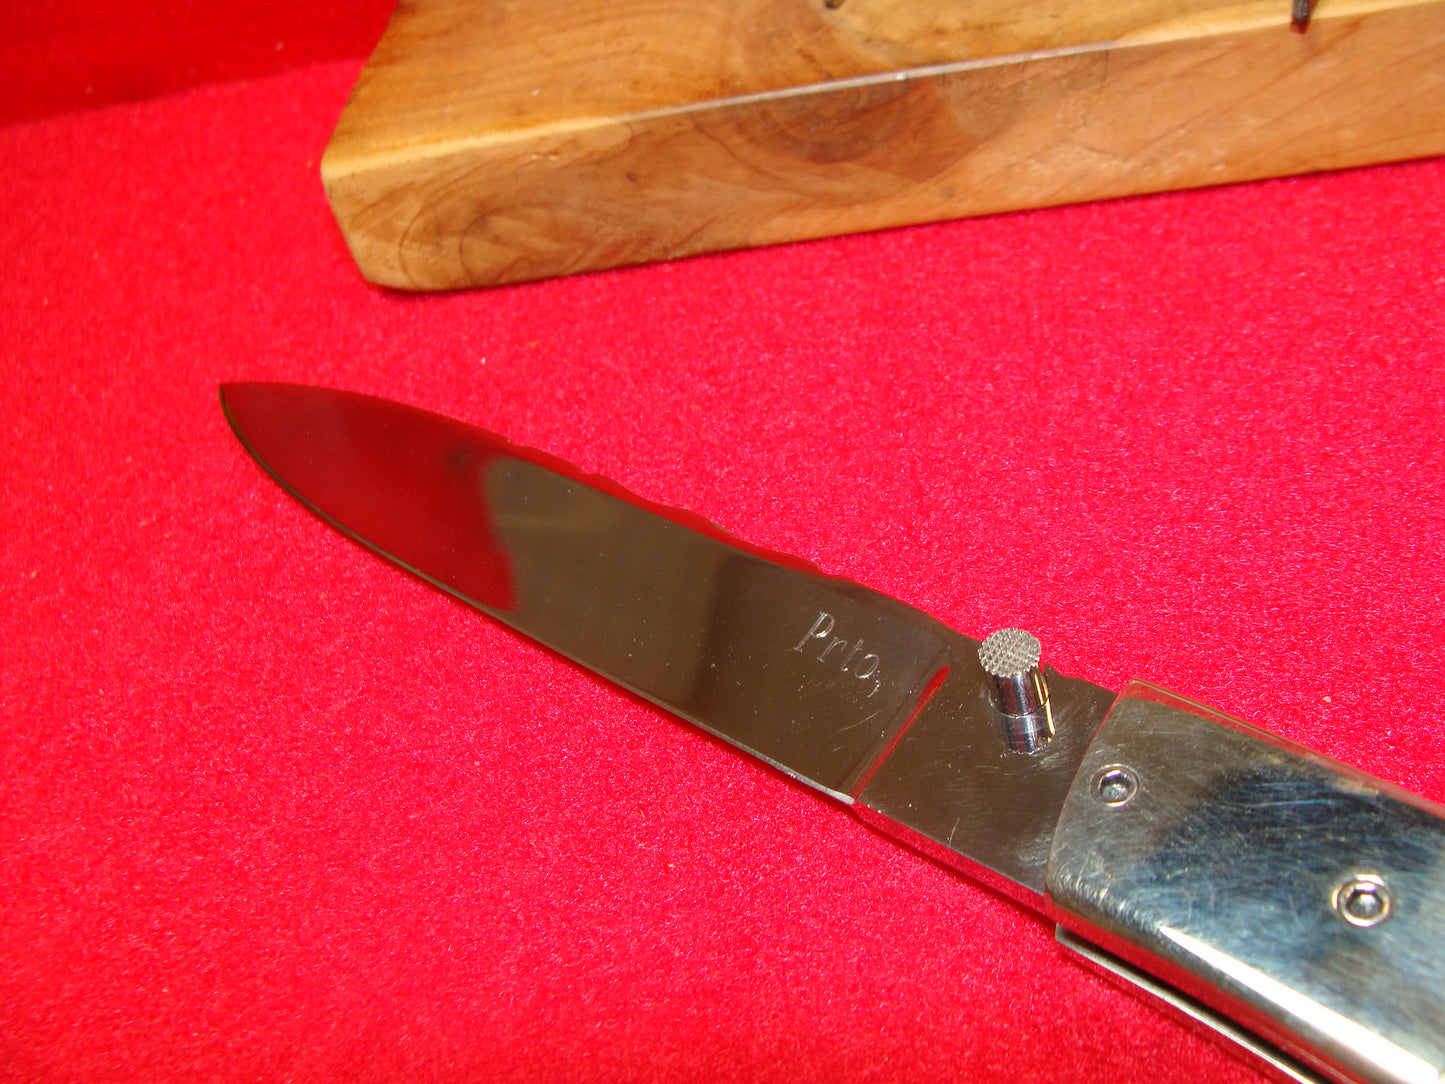 B.C.K. PROTO BUTTON RELEASE CUSTOM AUTOMATIC KNIFE SMOOTH WHITE BONE HANDLES